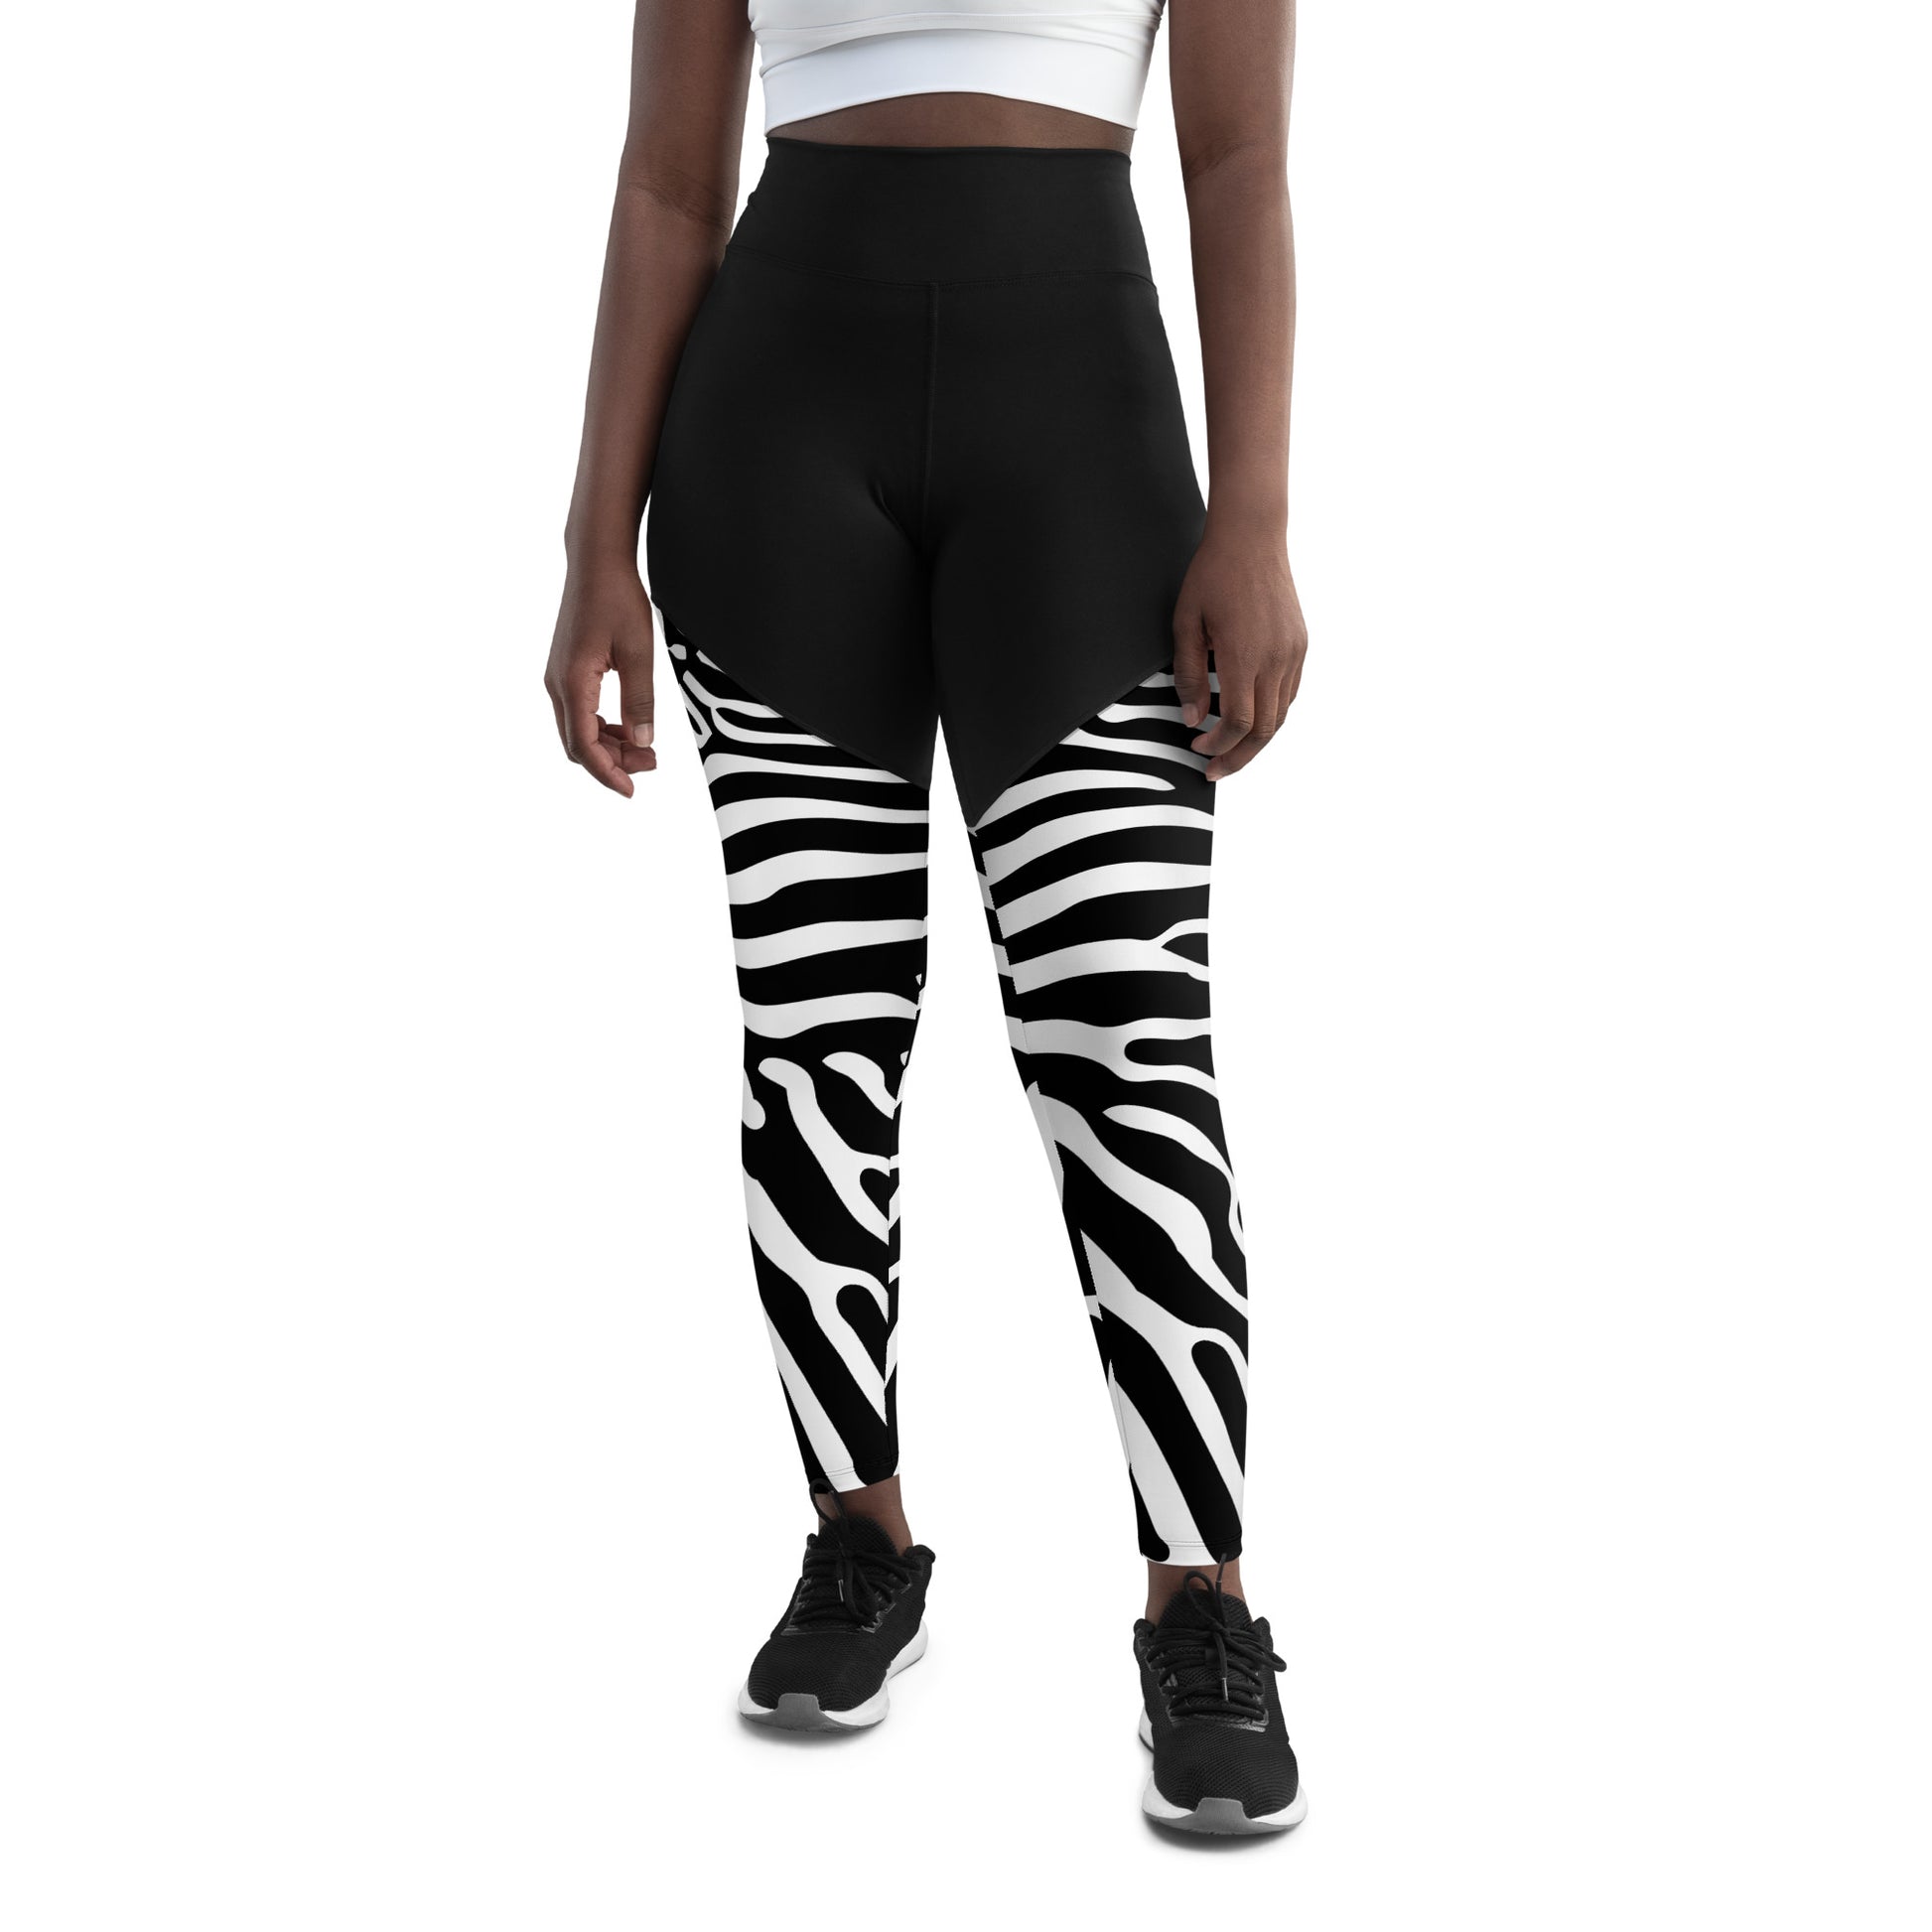 Zebra Sports Leggings